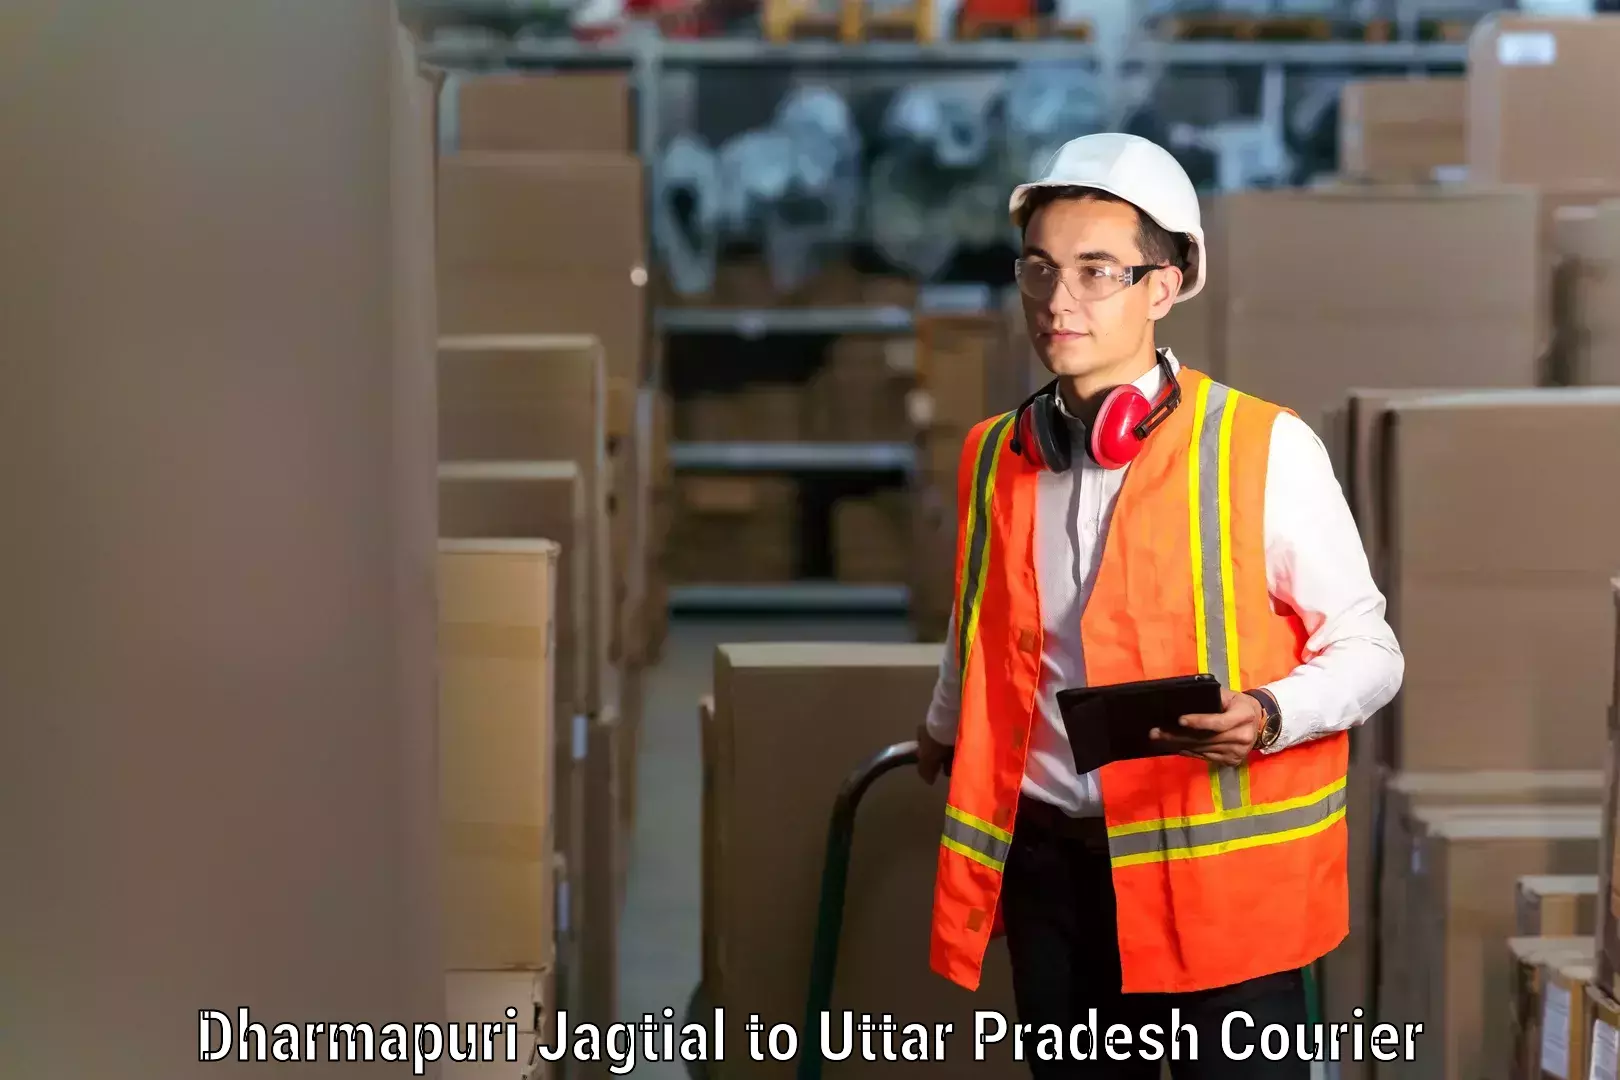 Efficient moving company Dharmapuri Jagtial to Dhaurahara